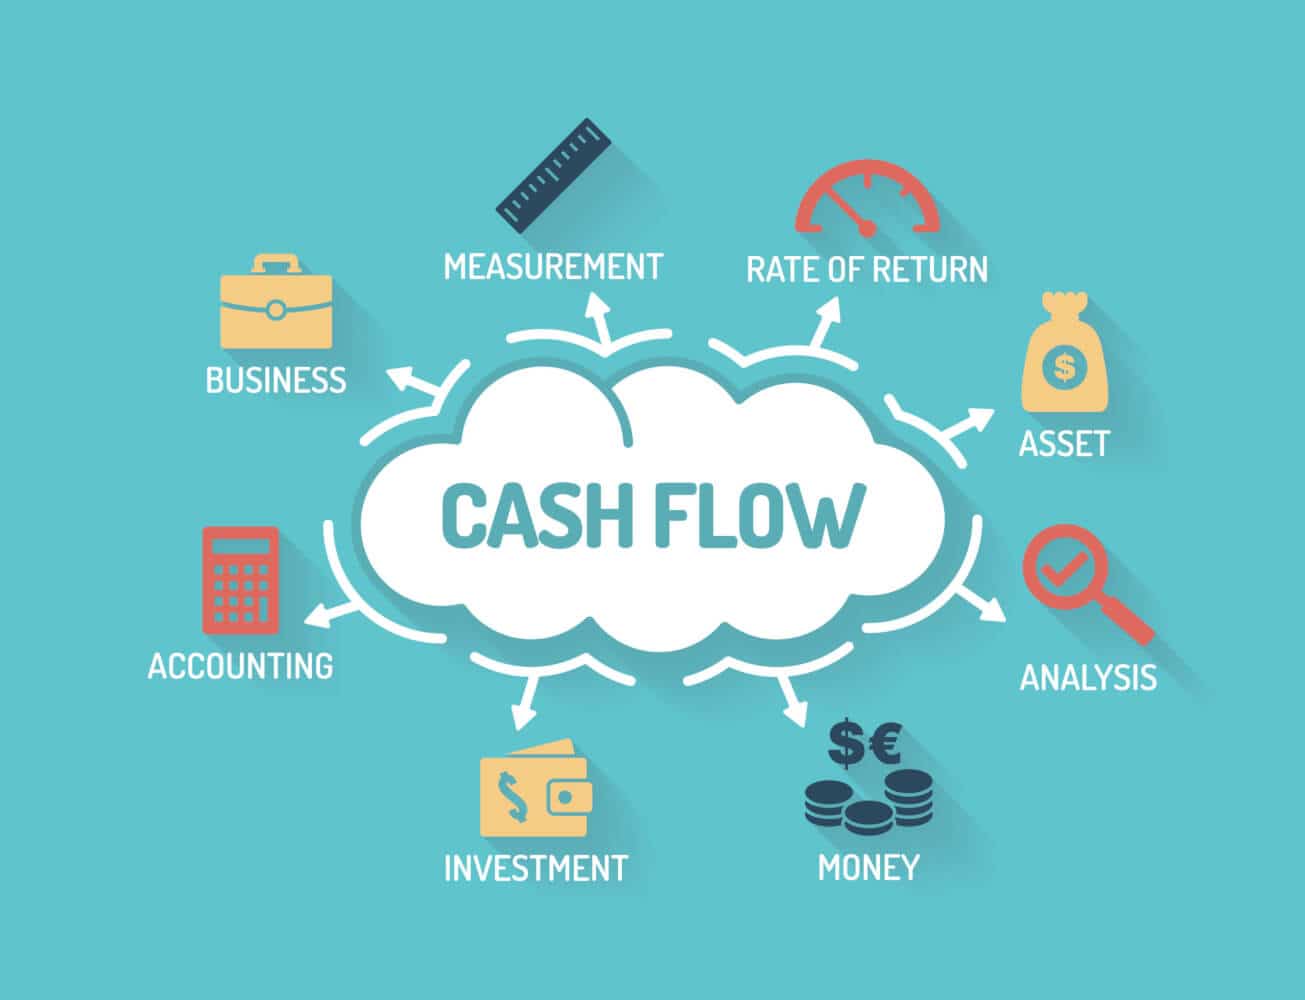 How can I improve my cash flow management?